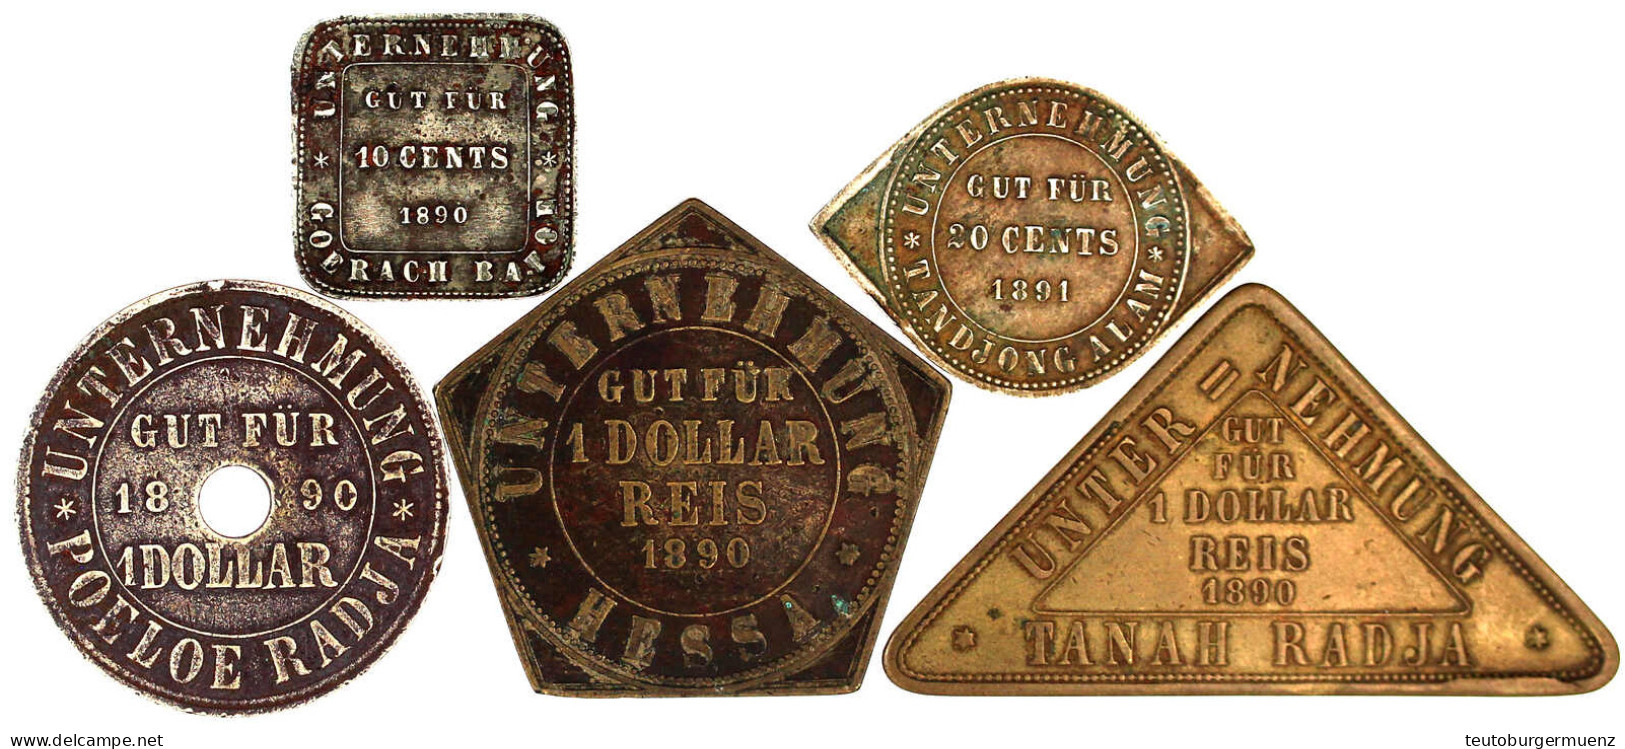 5 Plantagentokens: Unternehmung Tandjong Alam 20 Cents 1891, Goerach Batoe 10 Cents 1890, Poeloe Radja Dollar 1890, Tana - Dutch East Indies